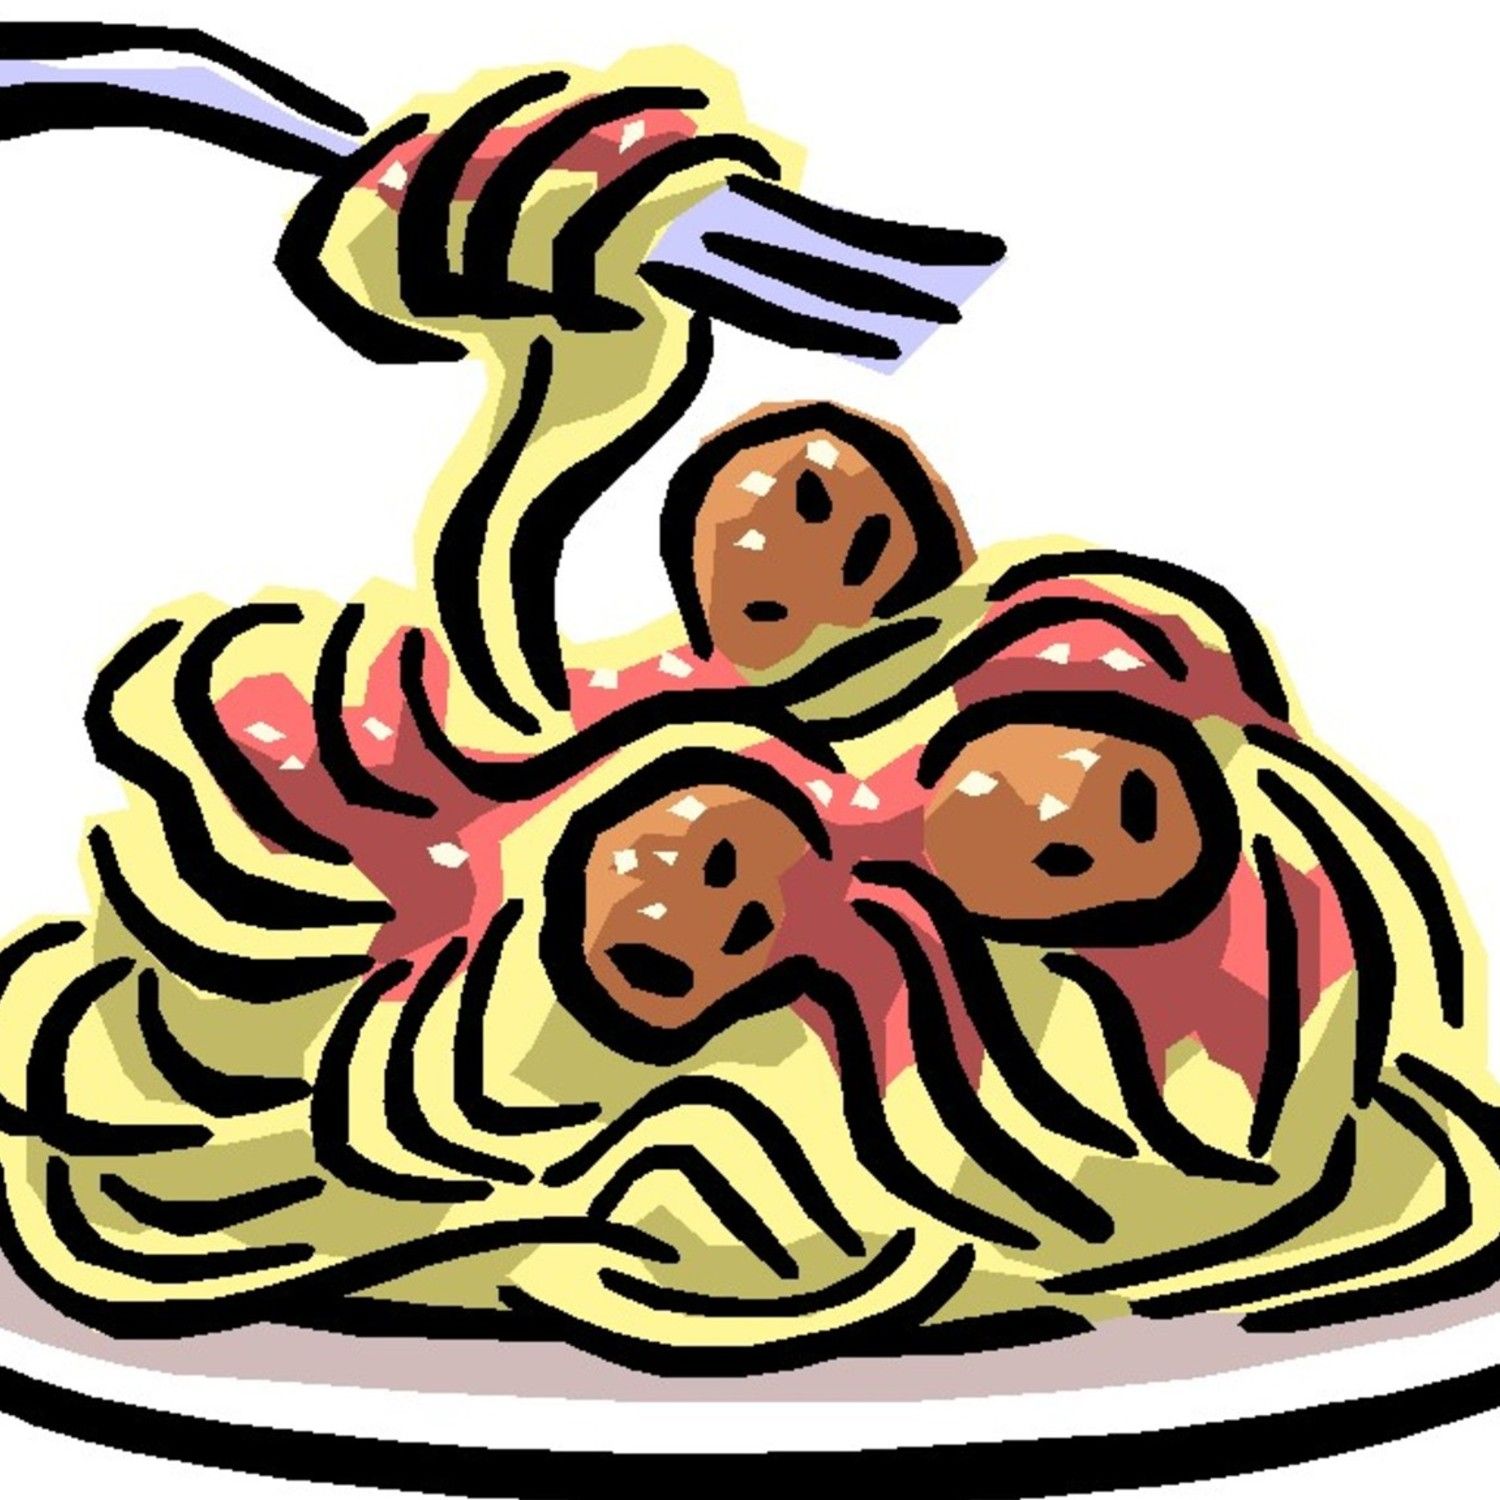 diner clipart spaghetti bolognese